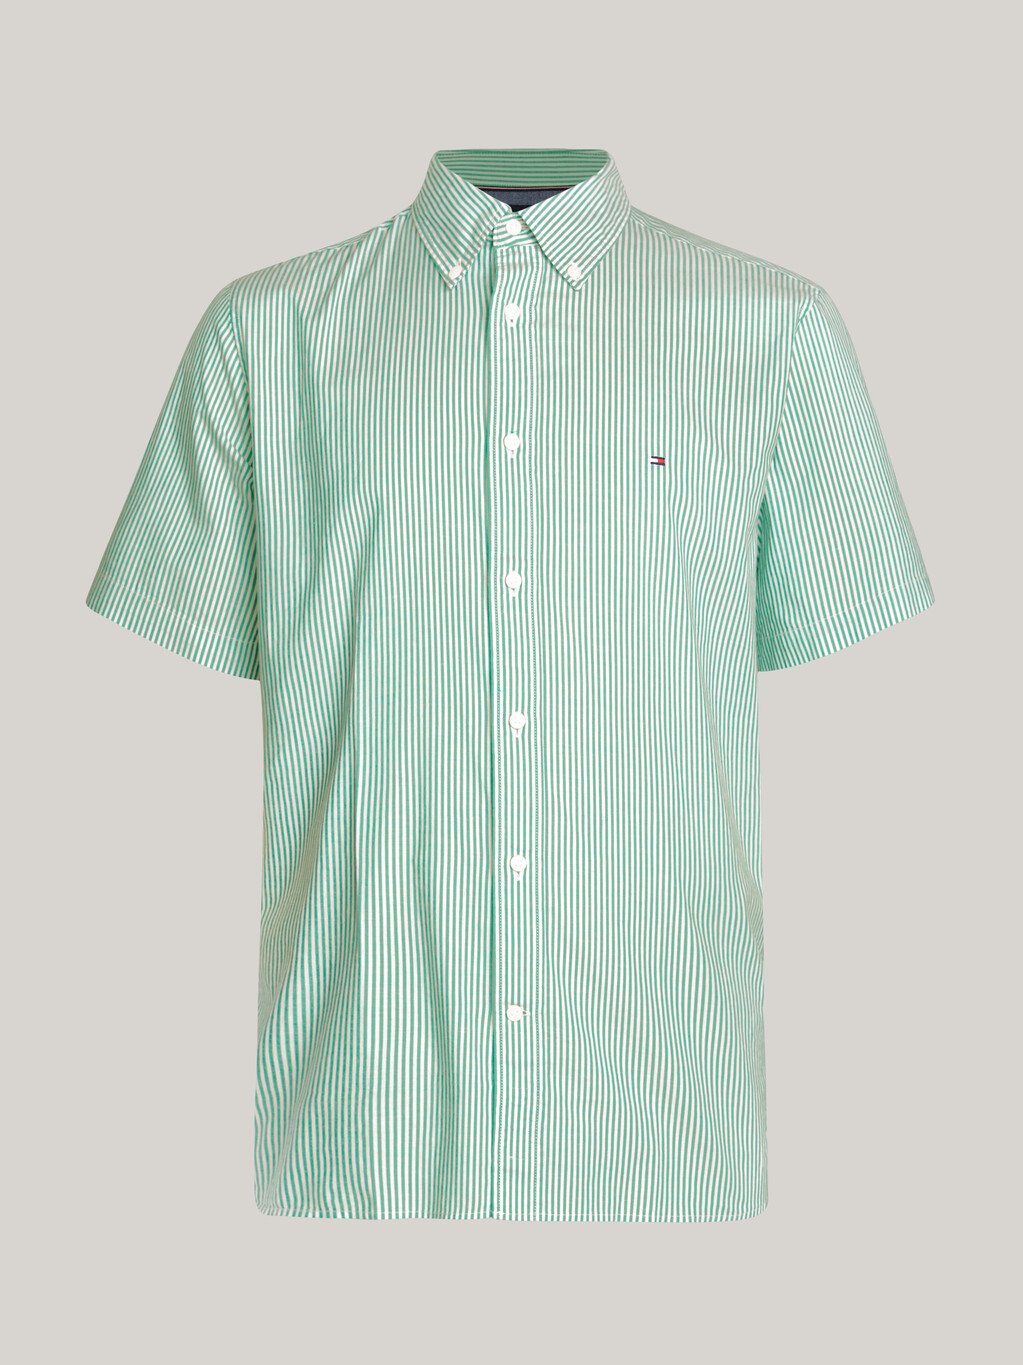 TH Flex 府綢常規短袖襯衫, Olympic Green / Optic White, hi-res